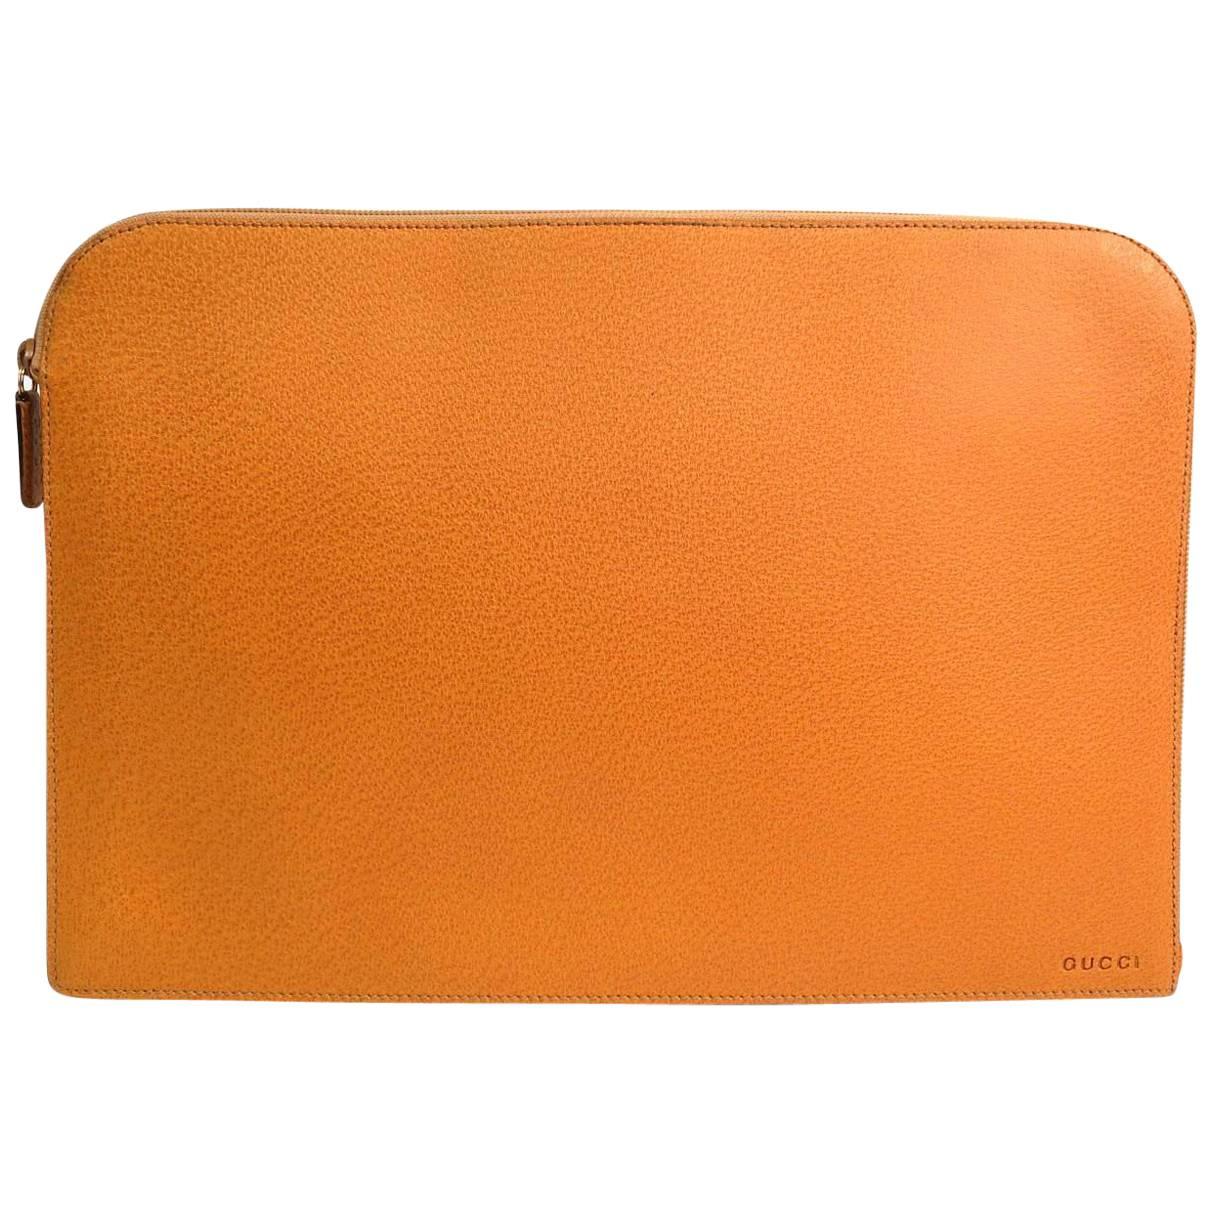 Gucci Leather Men's Women's Zip Around Carryall Laptop Travel Clutch Case Bag